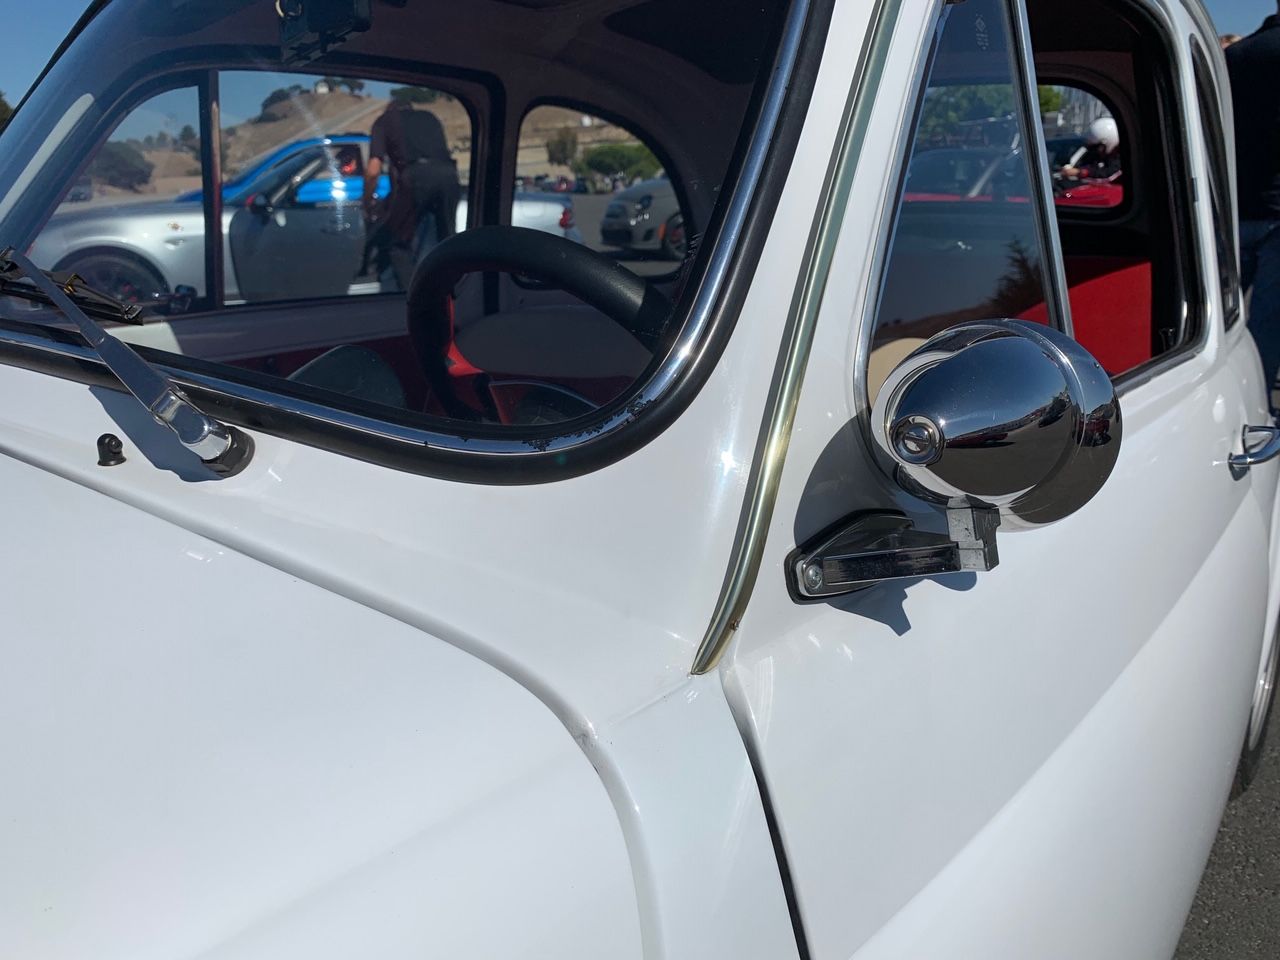 2019 Fiat 124 Abarth and 500 Abarth